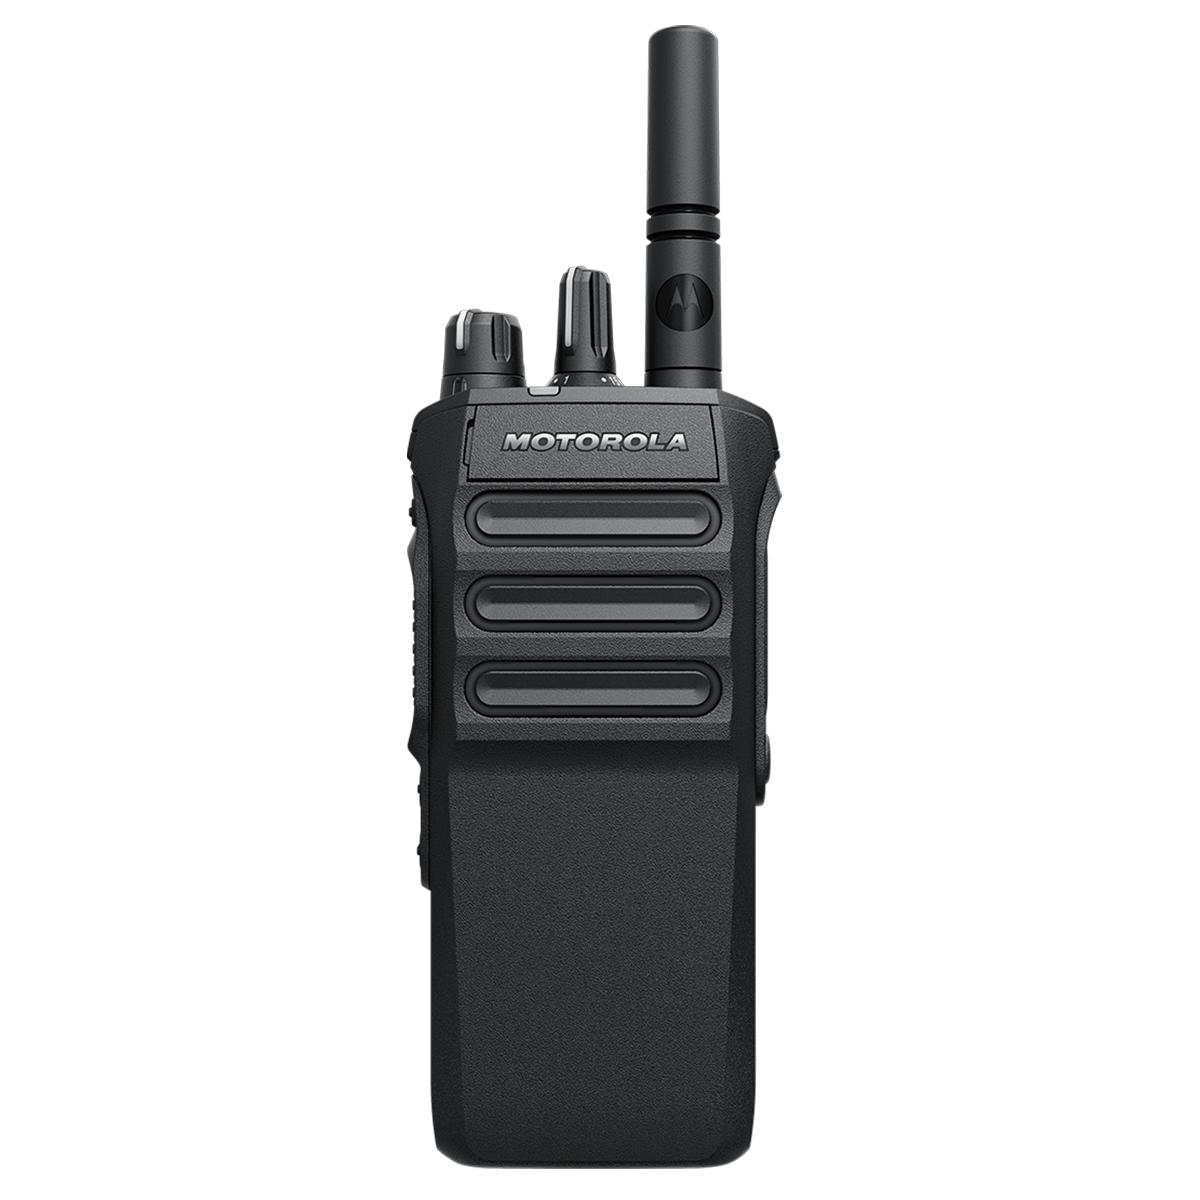 Radio Motorola digital R7 1000 Ch 5W VHF 136-174MHZ Enable NKP